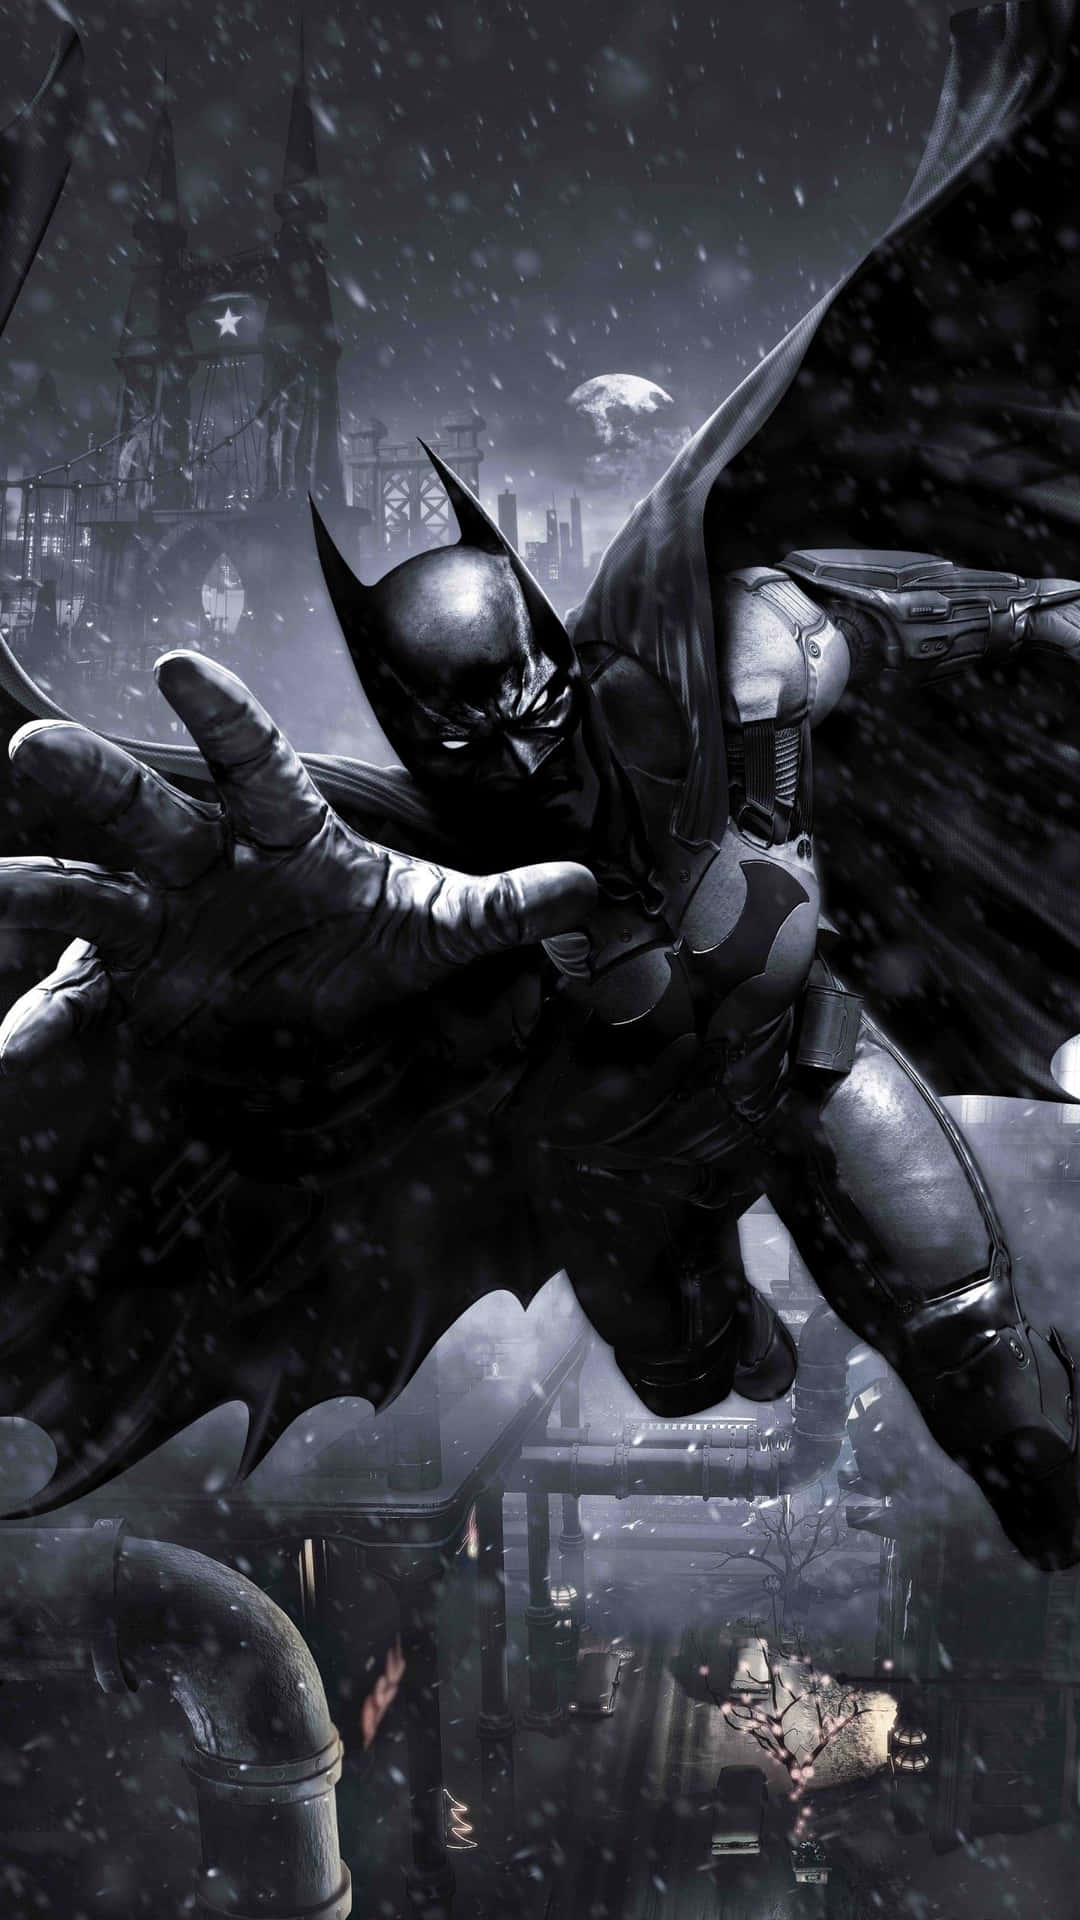 Batman in Action in Arkham Knight Wallpaper